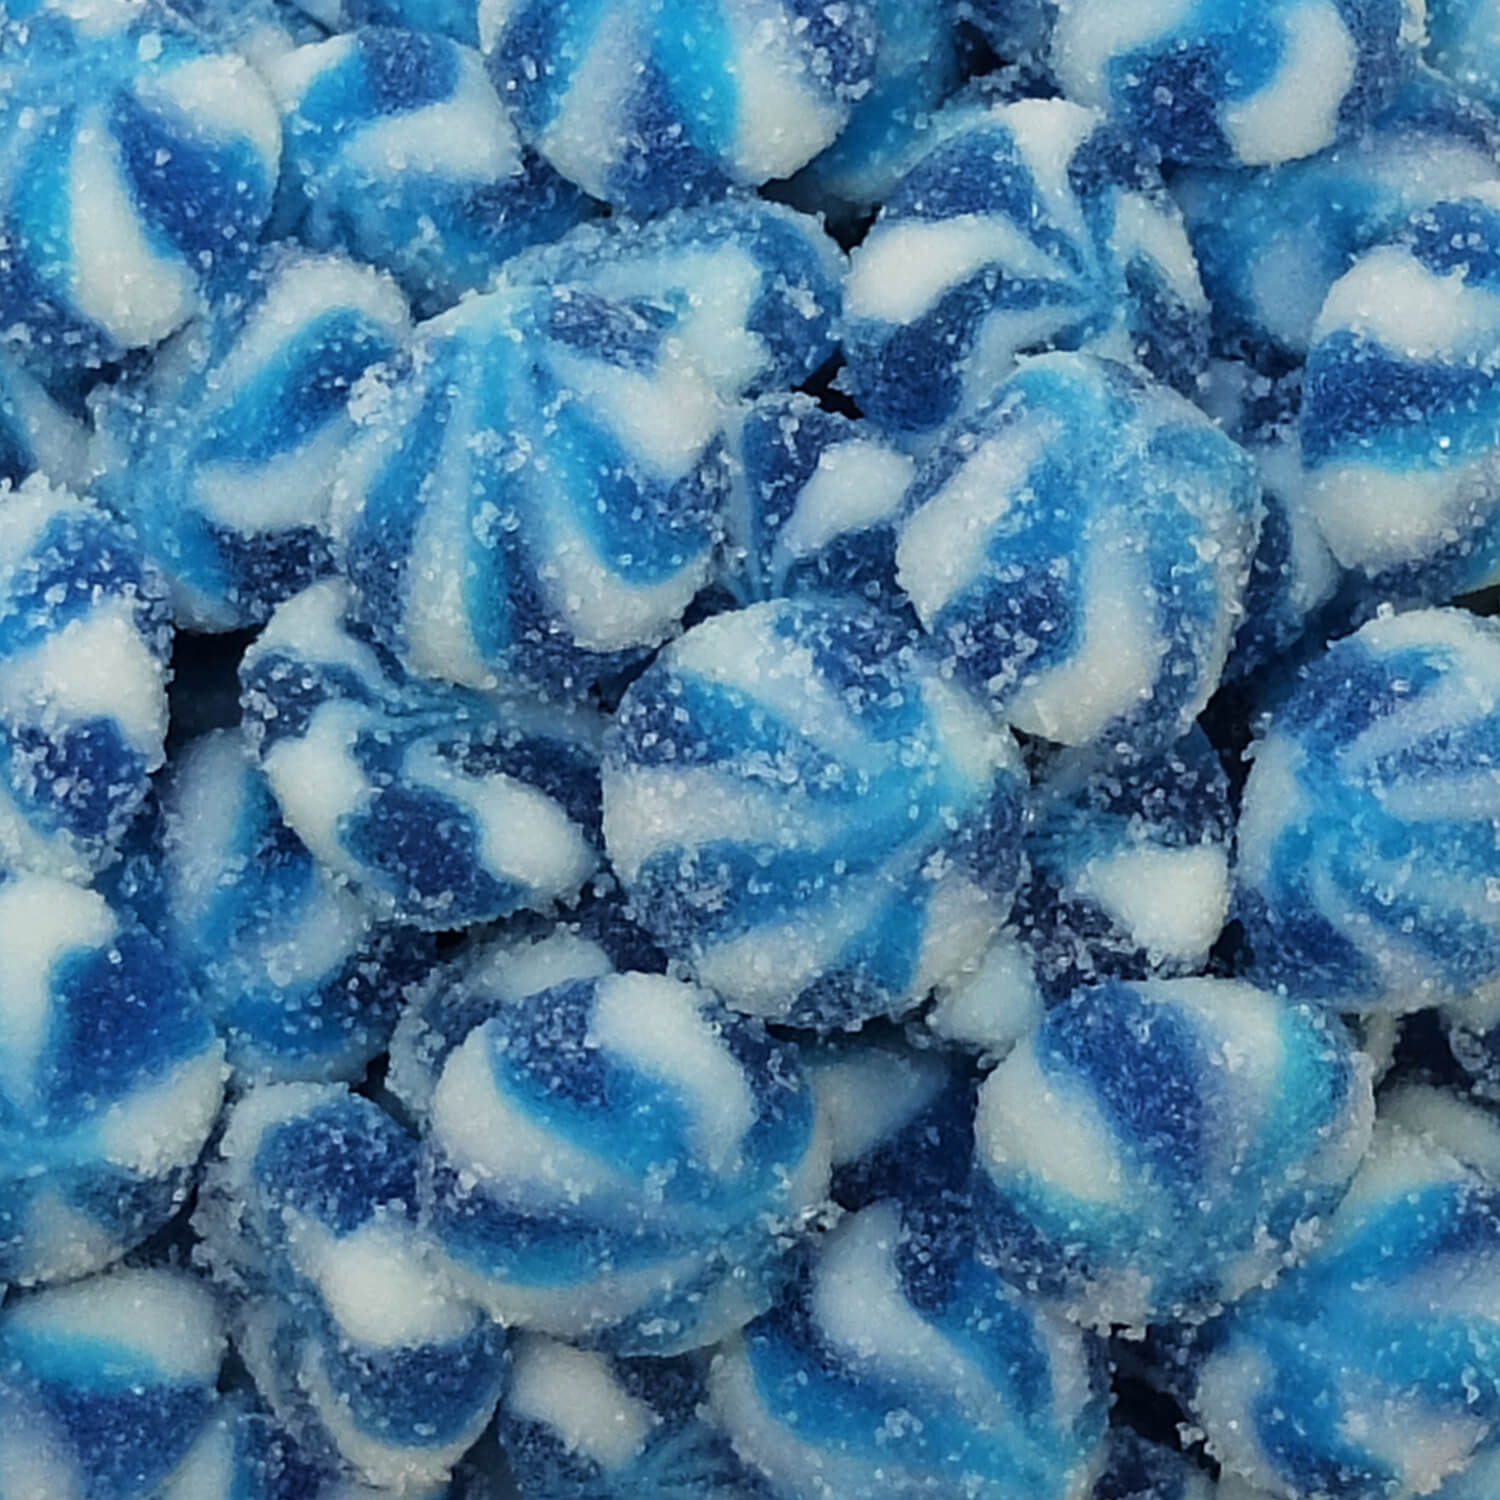 Sour blue raspberry swirls